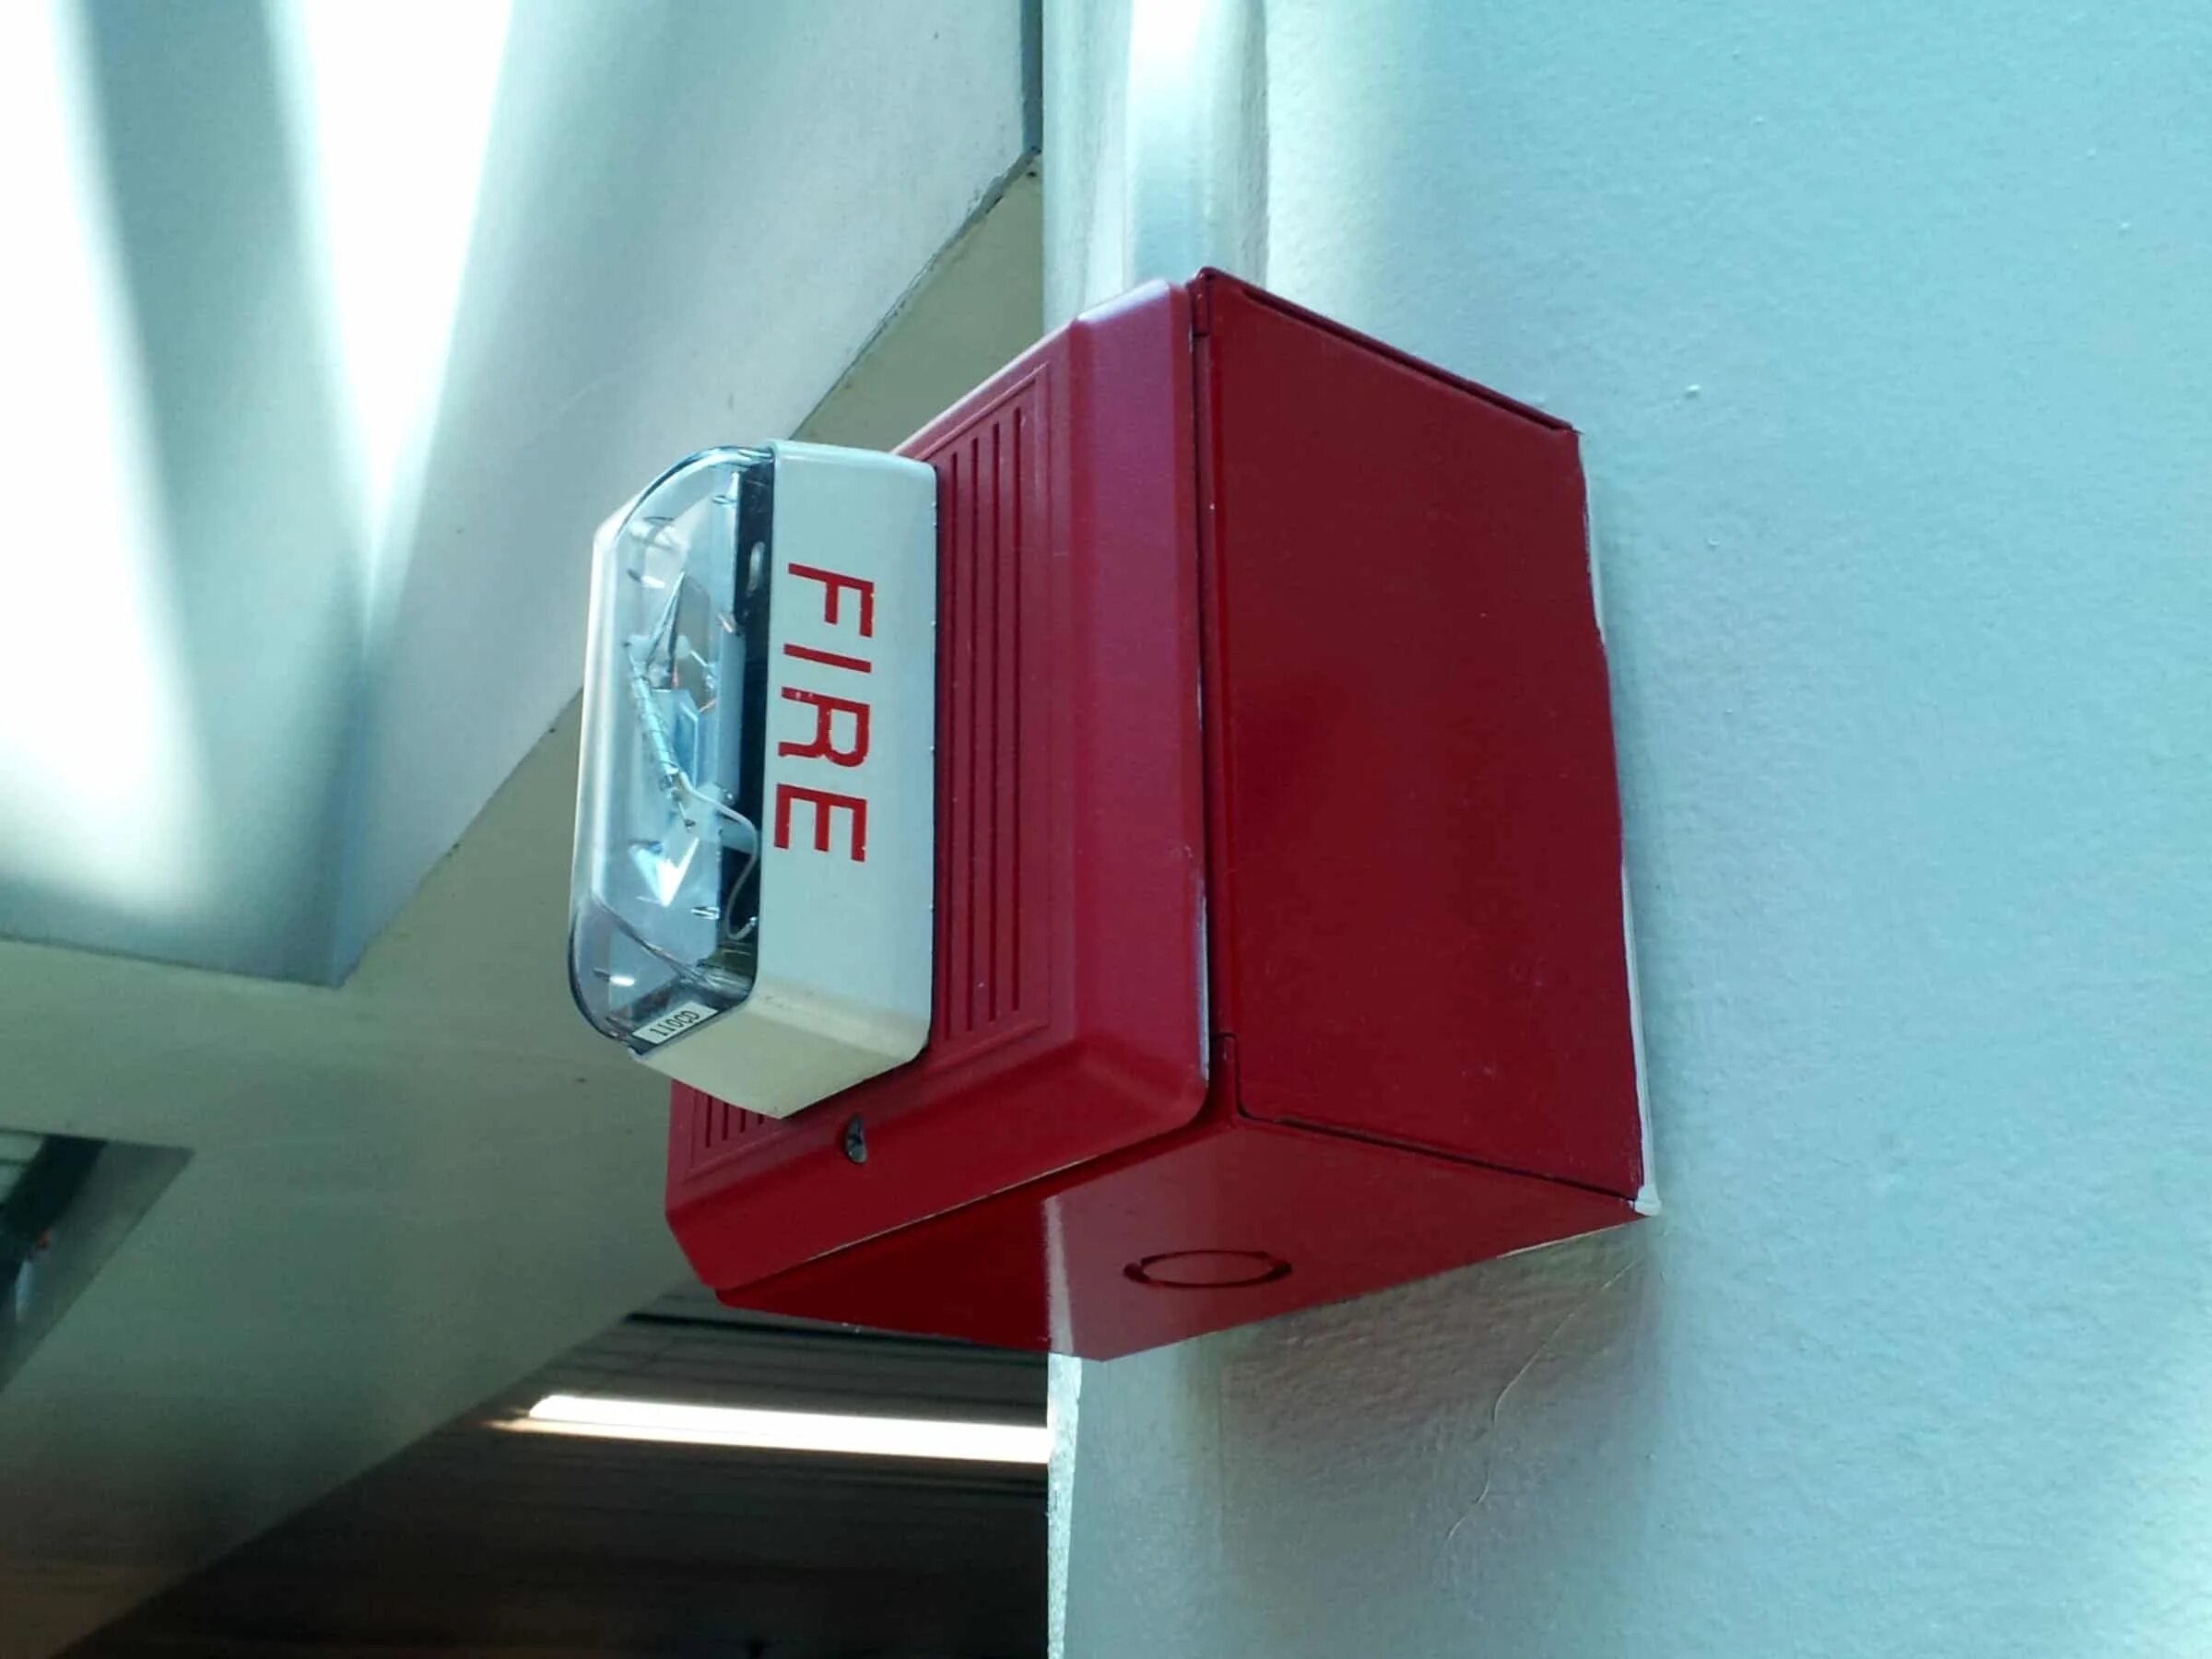 В доме срабатывает пожарная сигнализация. Система пожарной сигнализации. Fire Alarm. Kexun k1302a Fire Alarm System. Wall Mounted Fire Alarm Sounder with flasher (Weatherproof).